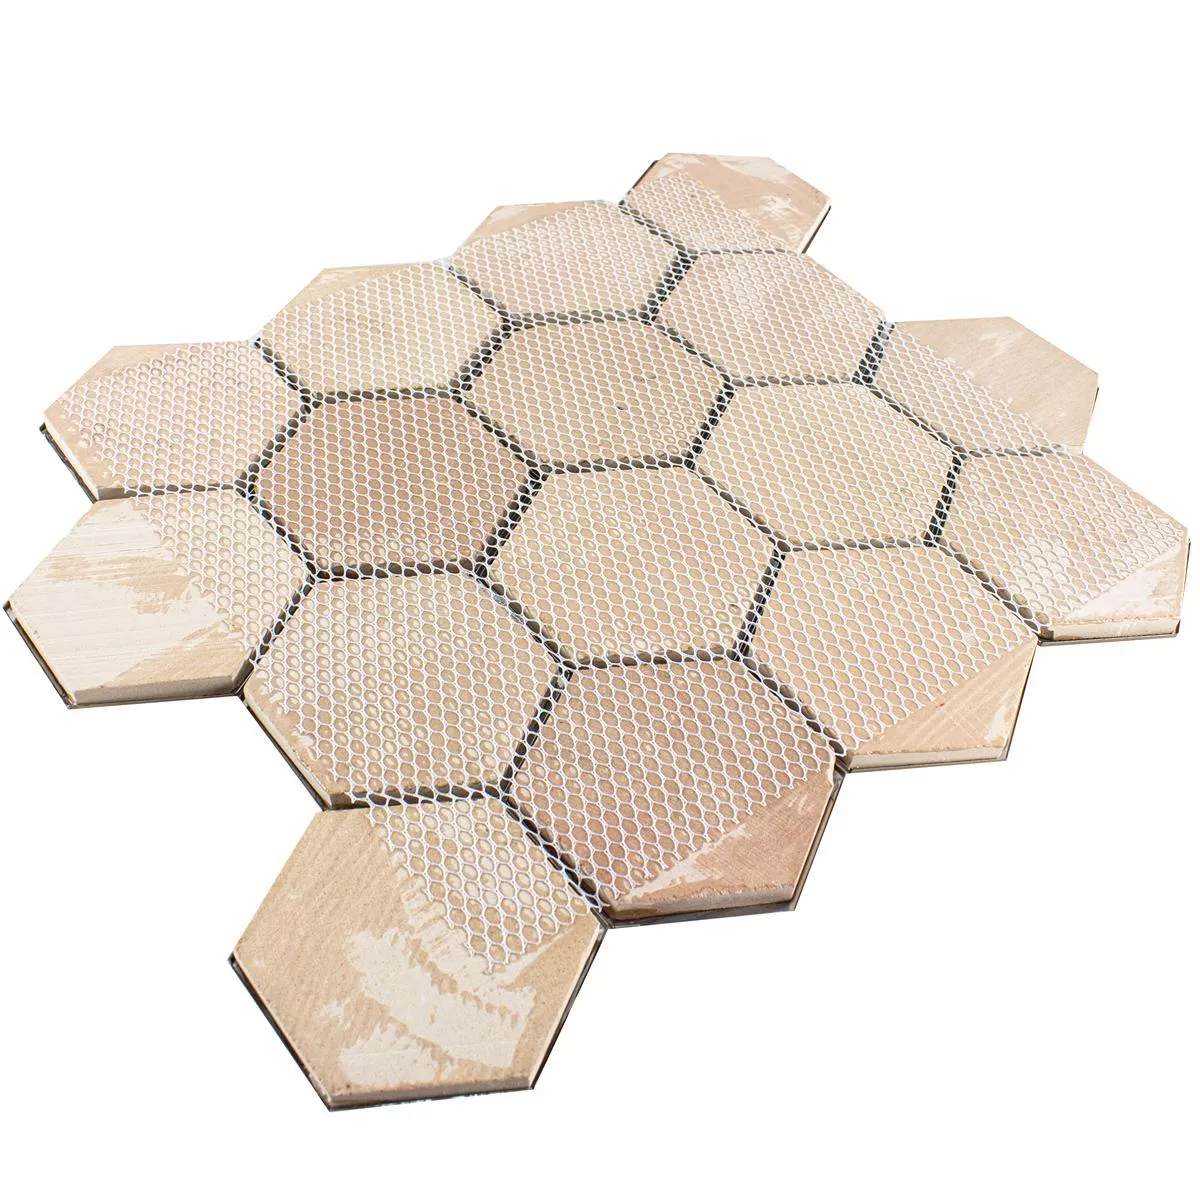 Sample Stainless Steel Mosaic Tiles Durango Hexagon 3D Silver